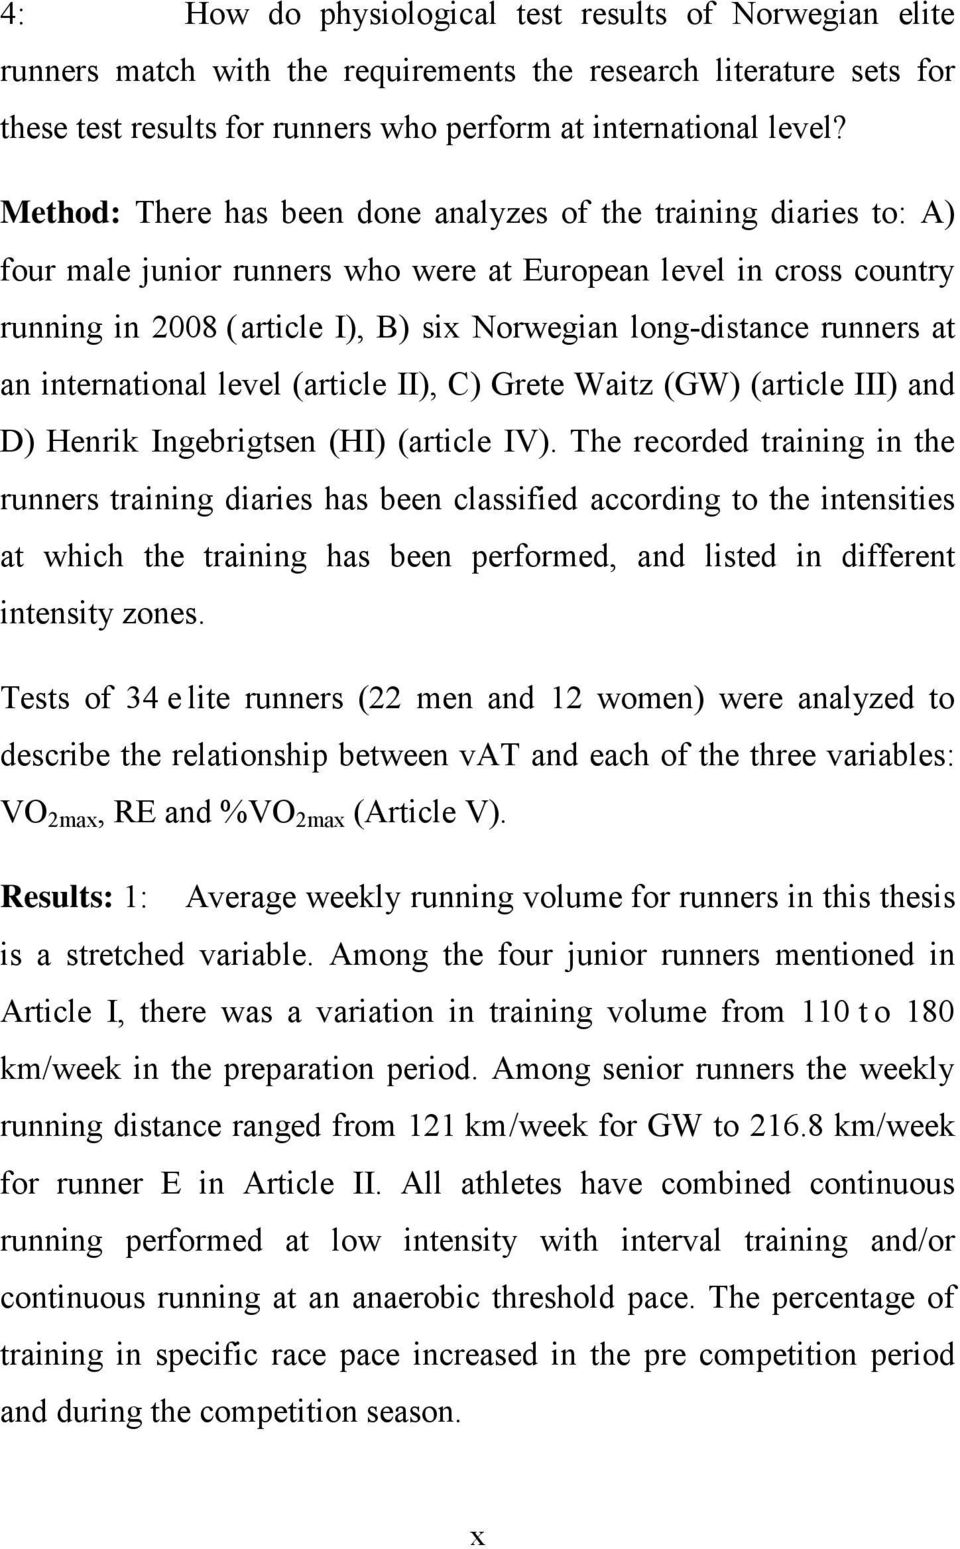 runners at an international level (article II), C) Grete Waitz (GW) (article III) and D) Henrik Ingebrigtsen (HI) (article IV).